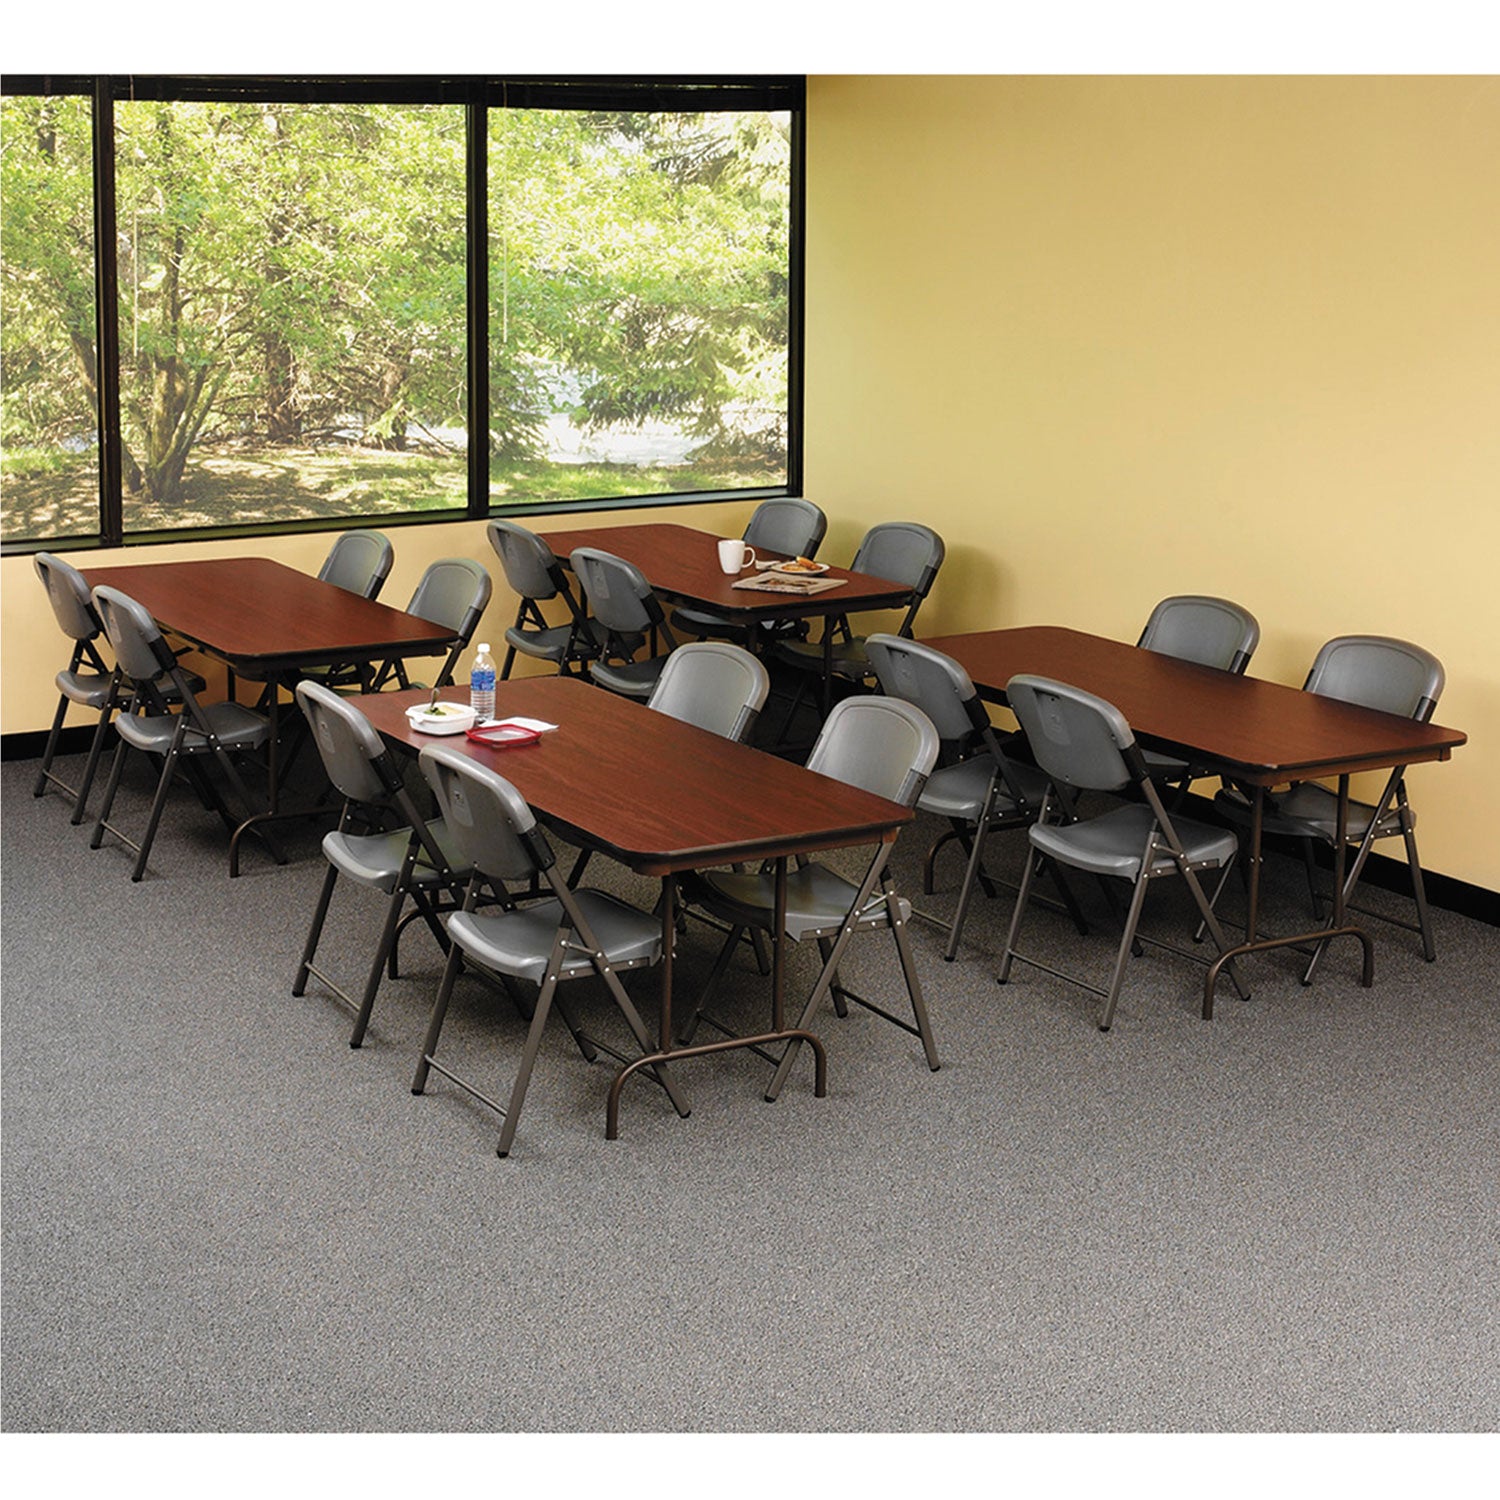 OfficeWorks Commercial Wood-Laminate Folding Table, Rectangular, 72" x 30" x 29", Mahogany - 